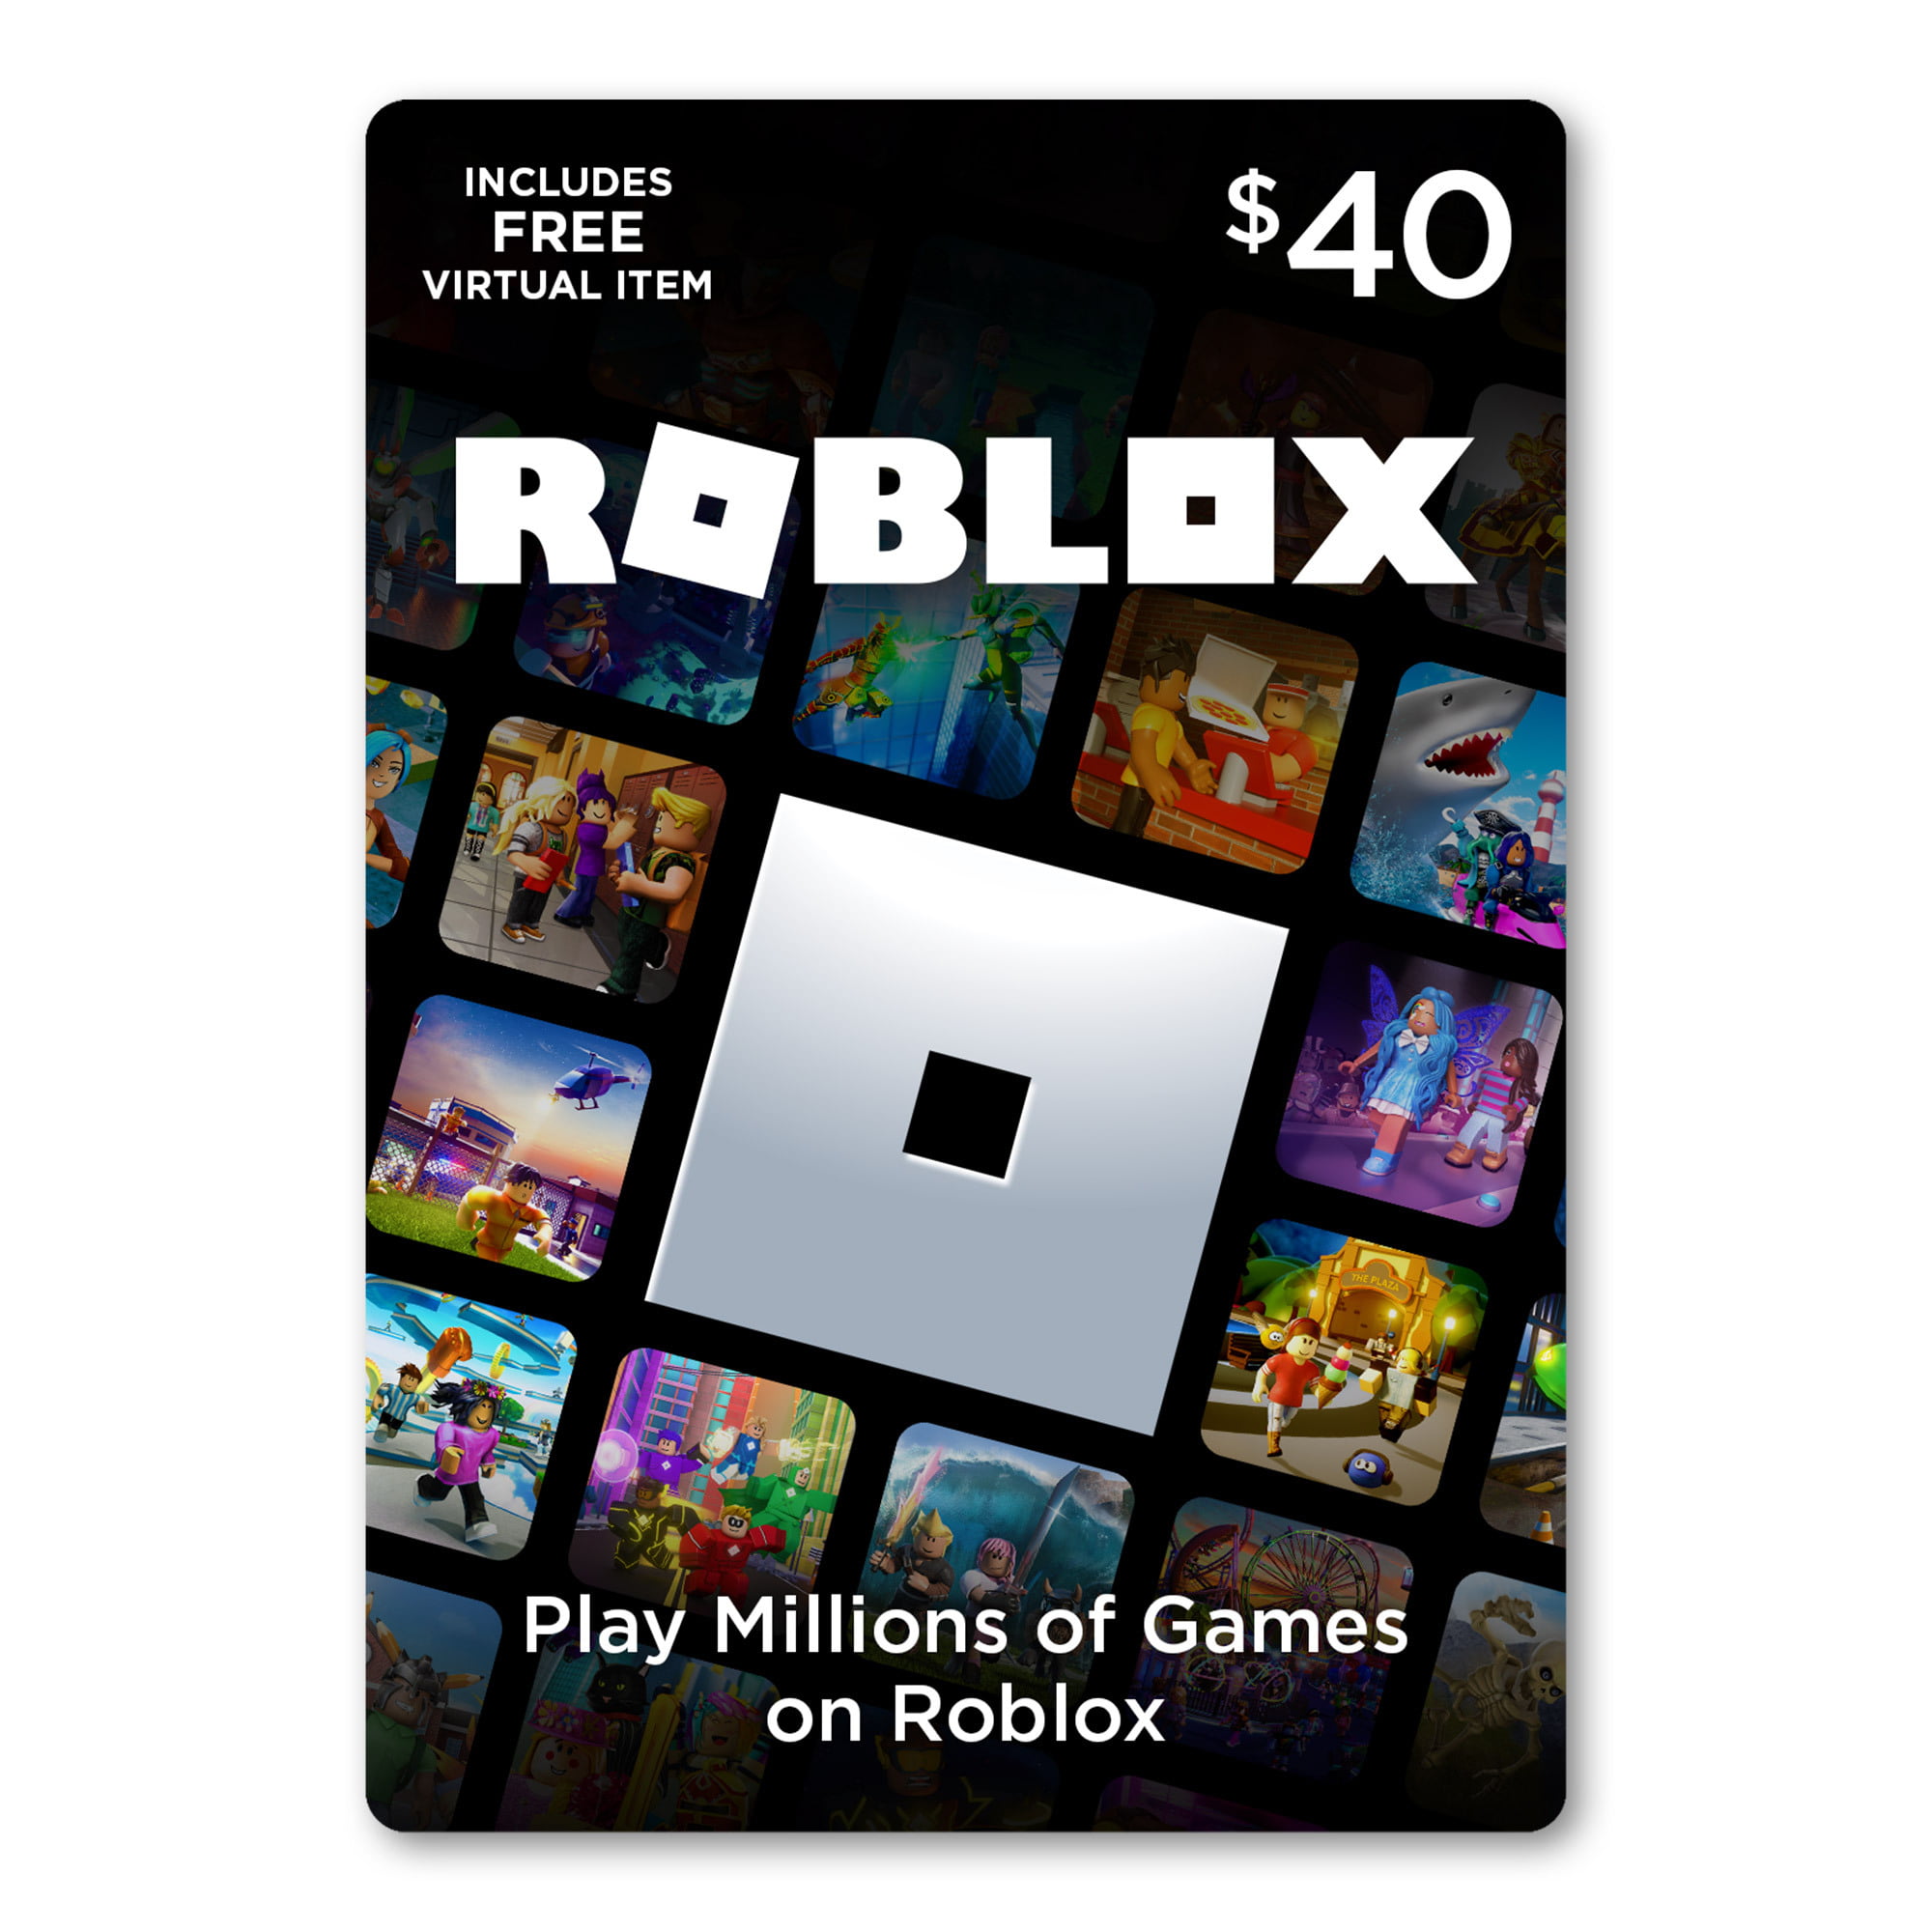 Roblox 40 Digital Gift Card Includes Exclusive Virtual Item Digital Download Walmart Com Walmart Com - frame rate manager roblox